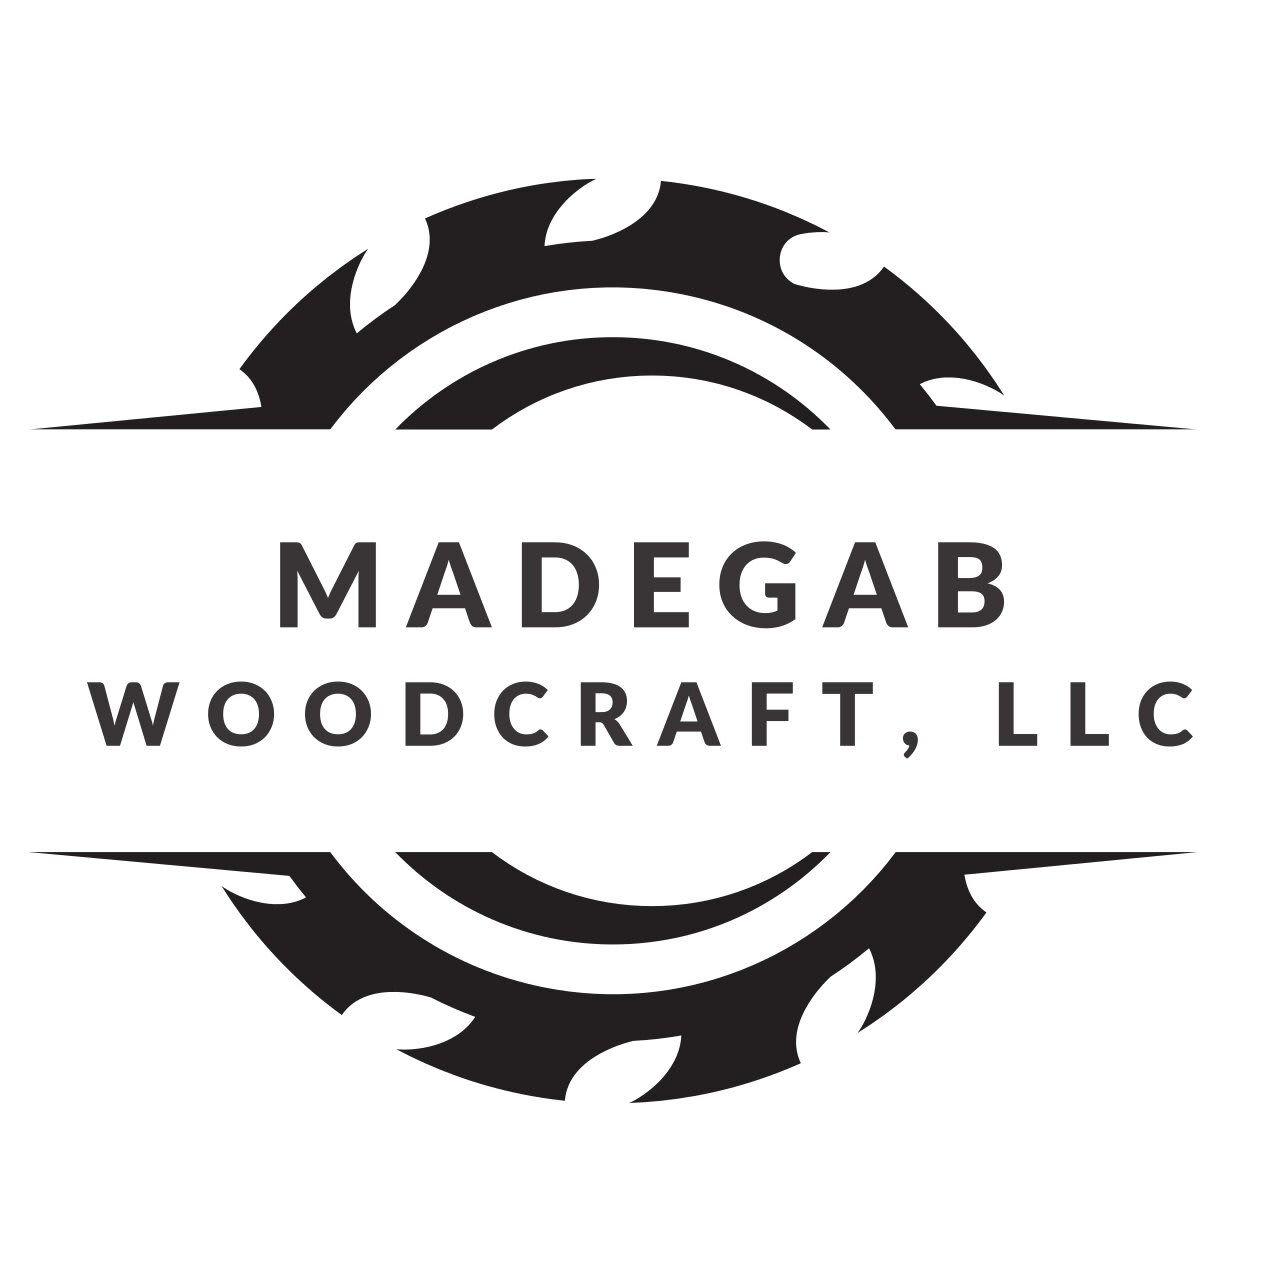 Madegab Woodcraft LLC